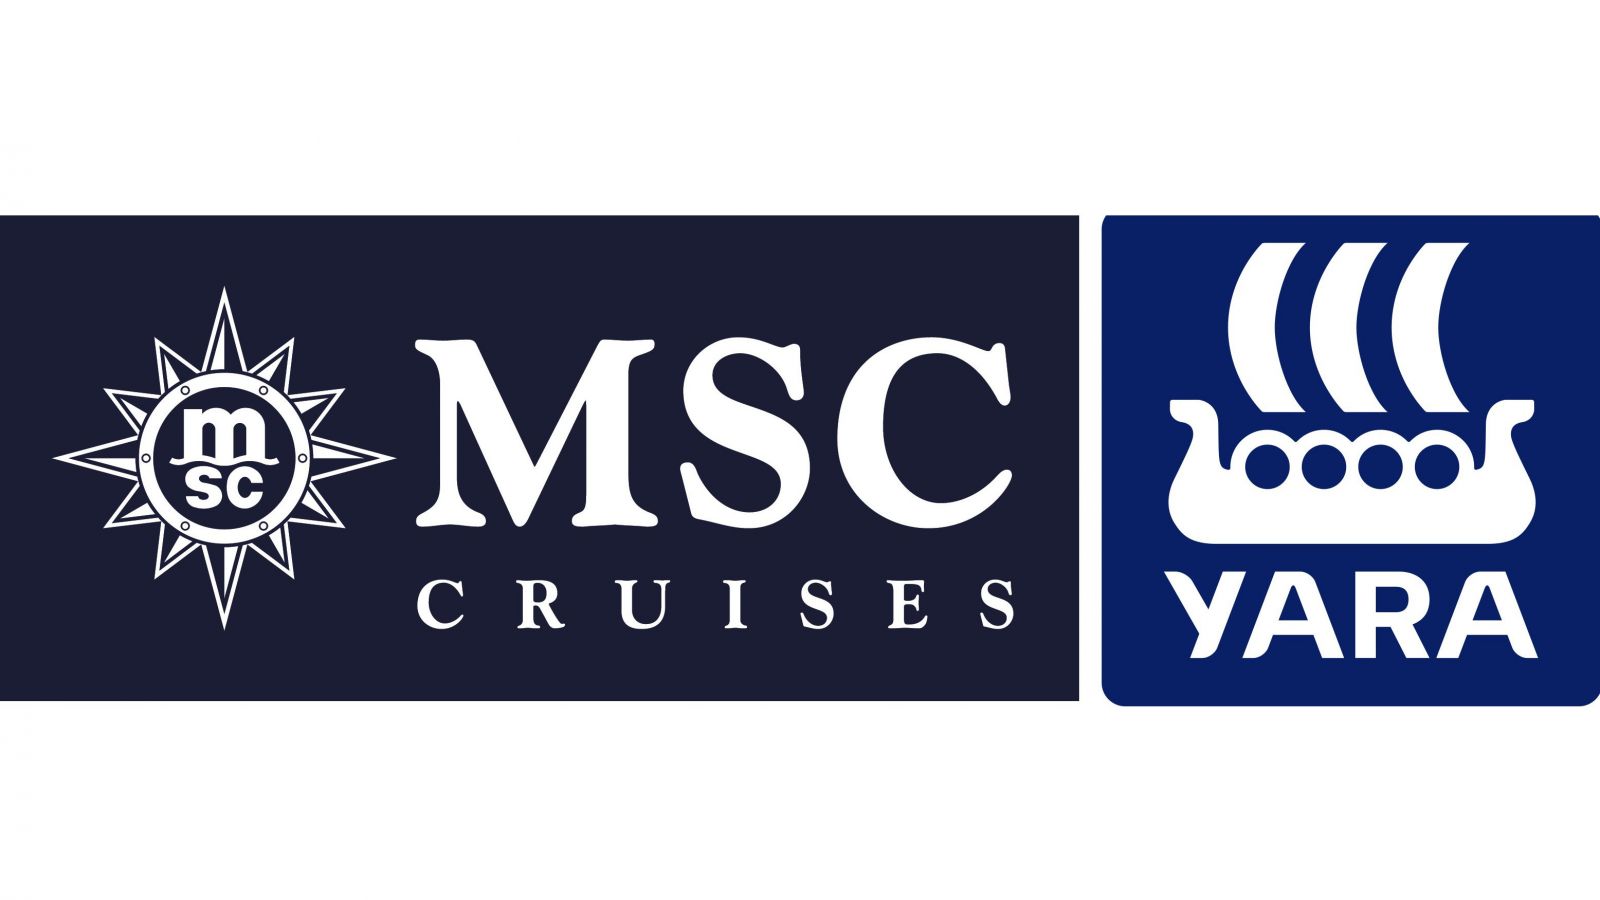 Халк банки сайт. MSC логотип. Пакеты напитков на MSC Cruises. Круиз логотип. Судовая компания MSC.